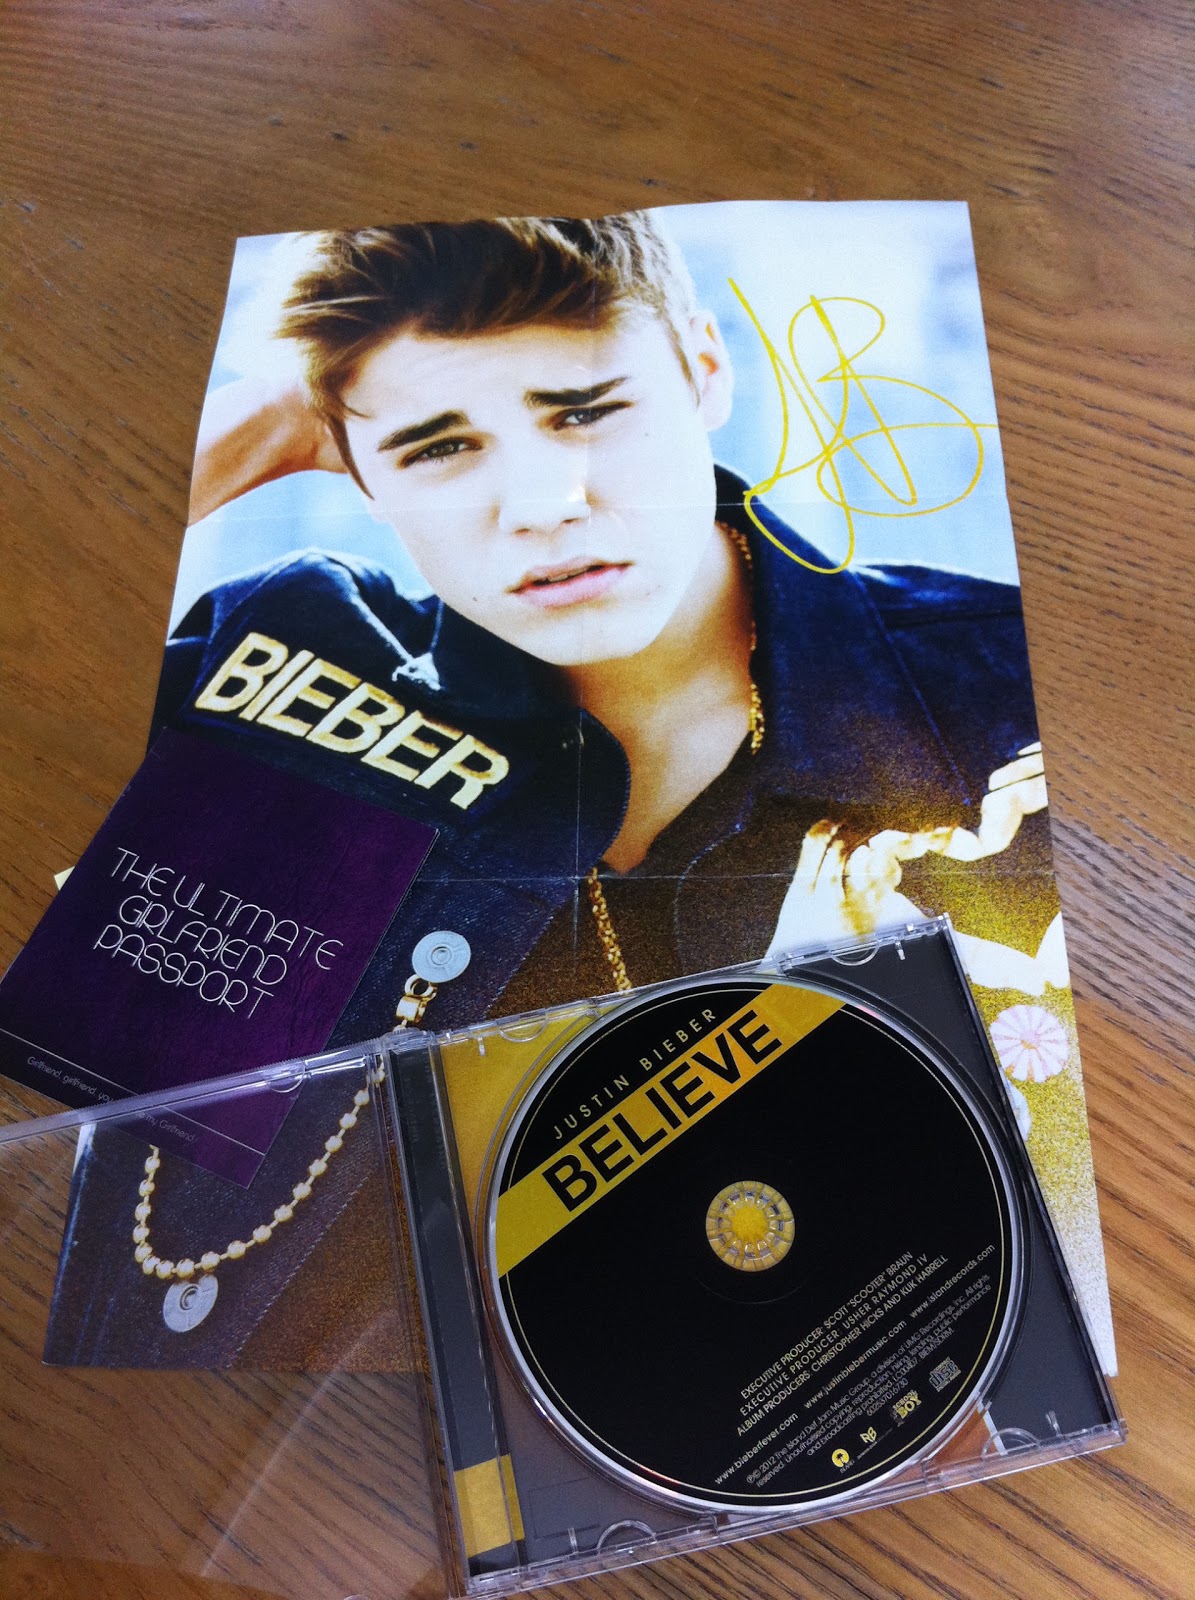 Rock it heartless!!!: Album review : Justin Bieber's Believe album1195 x 1600